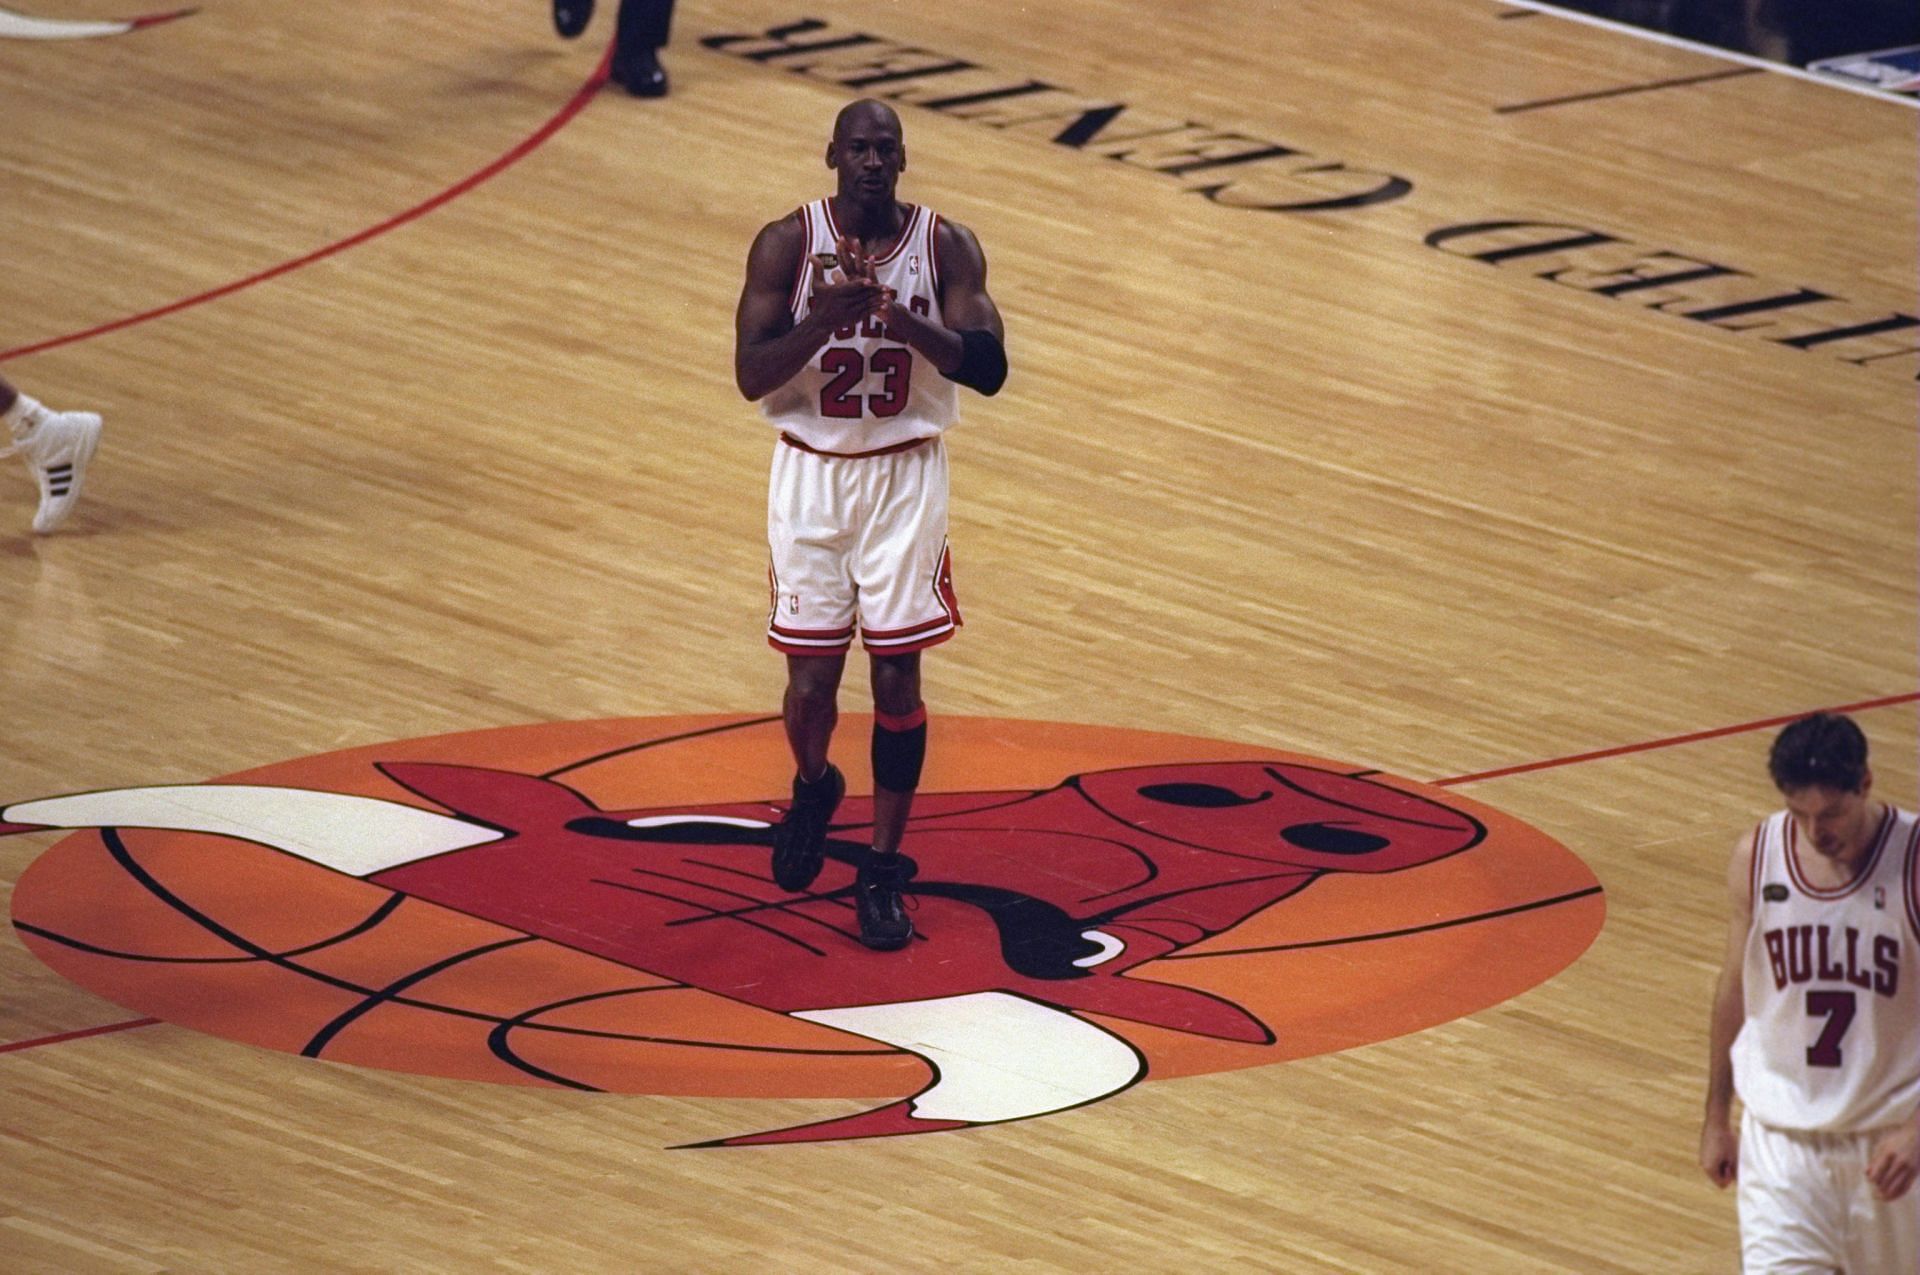 Michael Jordan's 'Last Dance' jersey fetches a record $10.1 million